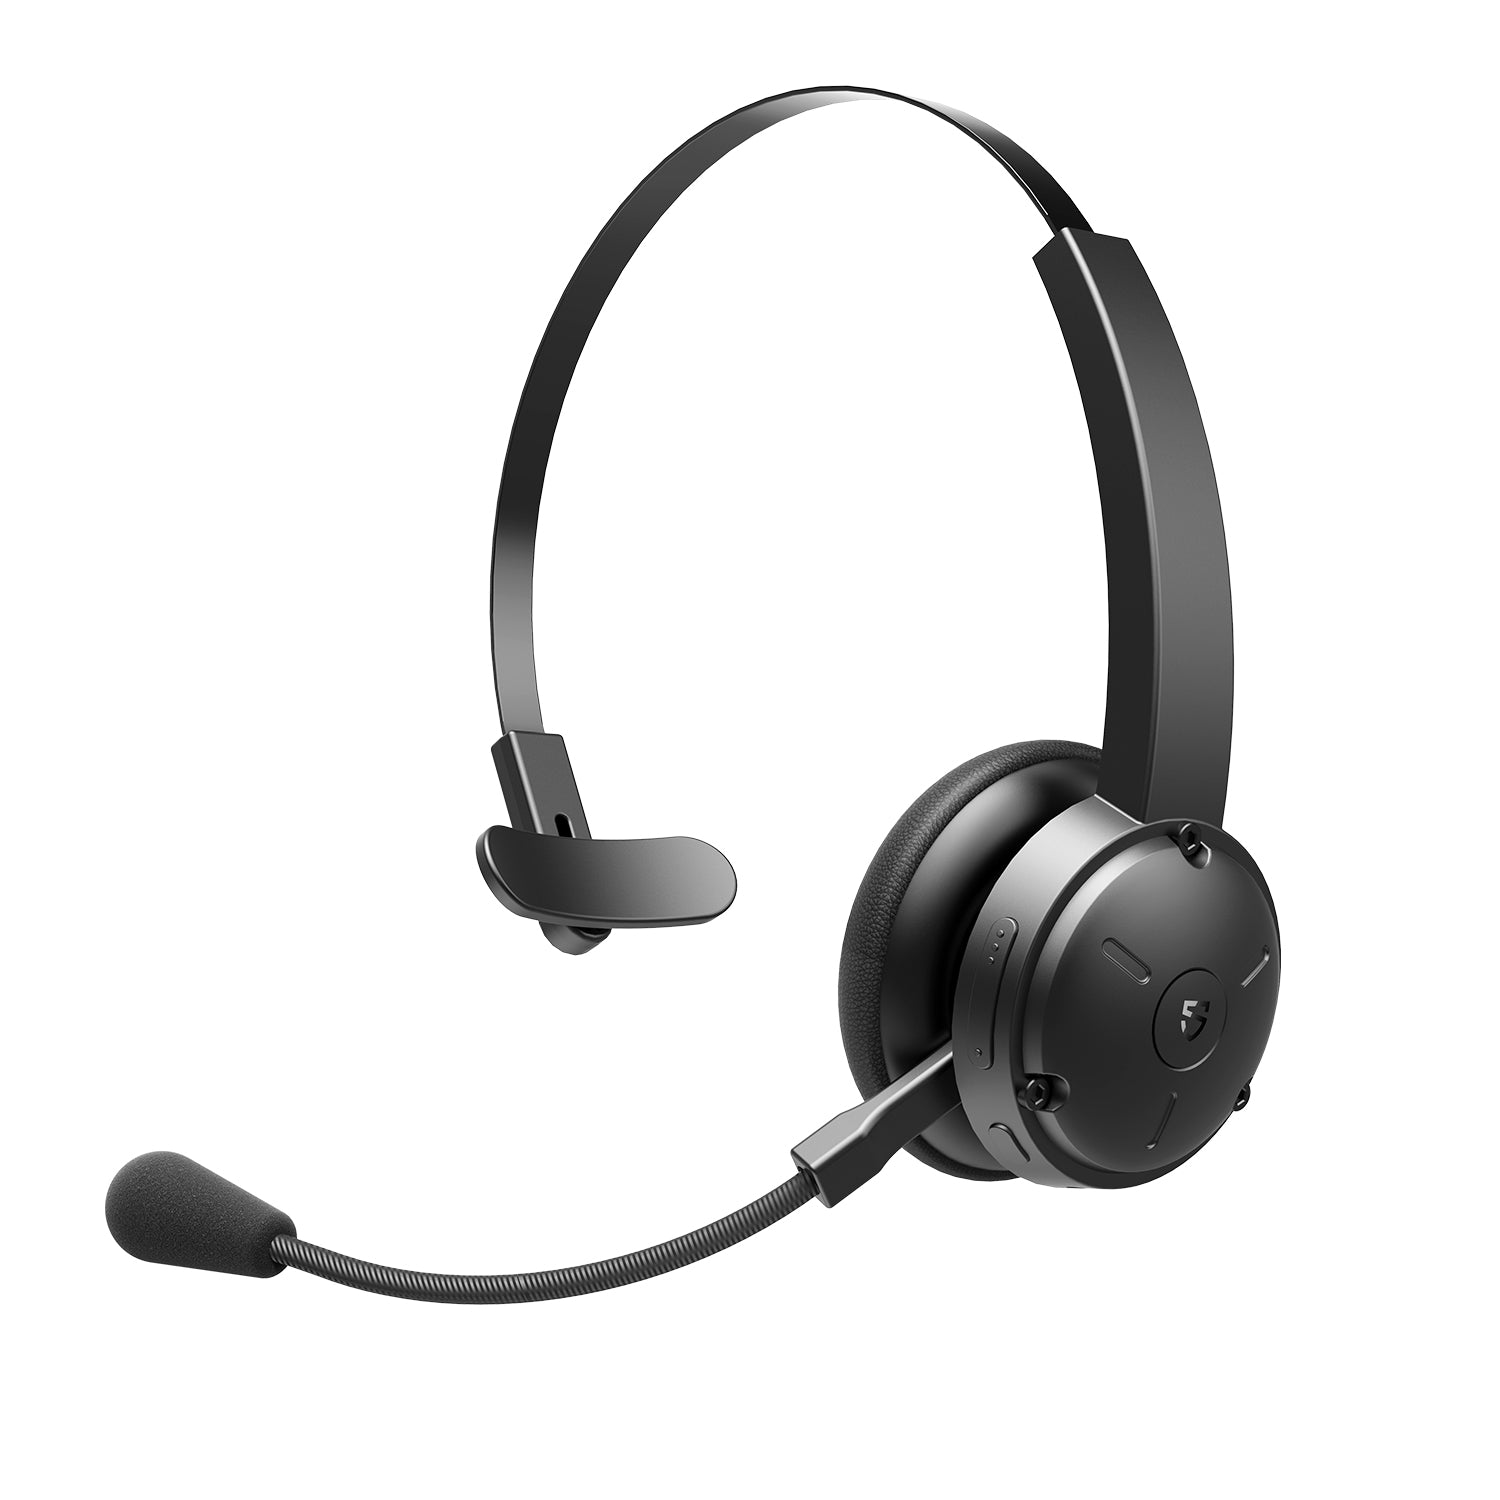 SoundPEATS Headphones for Sale, Shop New & Used Headphones